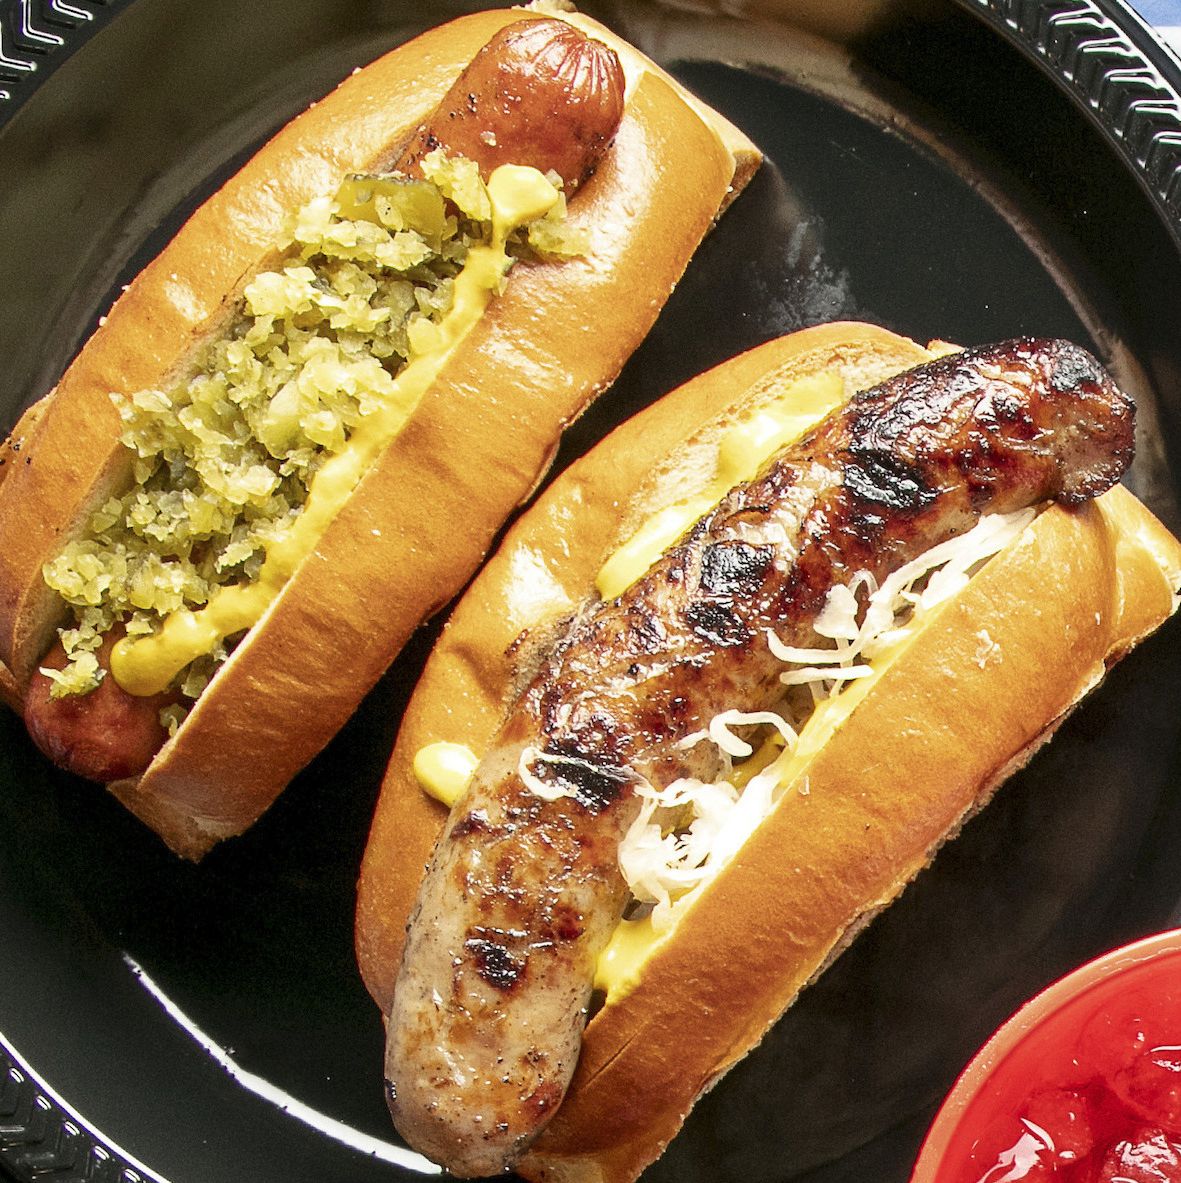 https://hips.hearstapps.com/hmg-prod/images/hot-dogs-bratwurst-sauerkraut-relish-1617121927.jpg?crop=0.737xw:0.740xh;0.167xw,0.0498xh&resize=1200:*